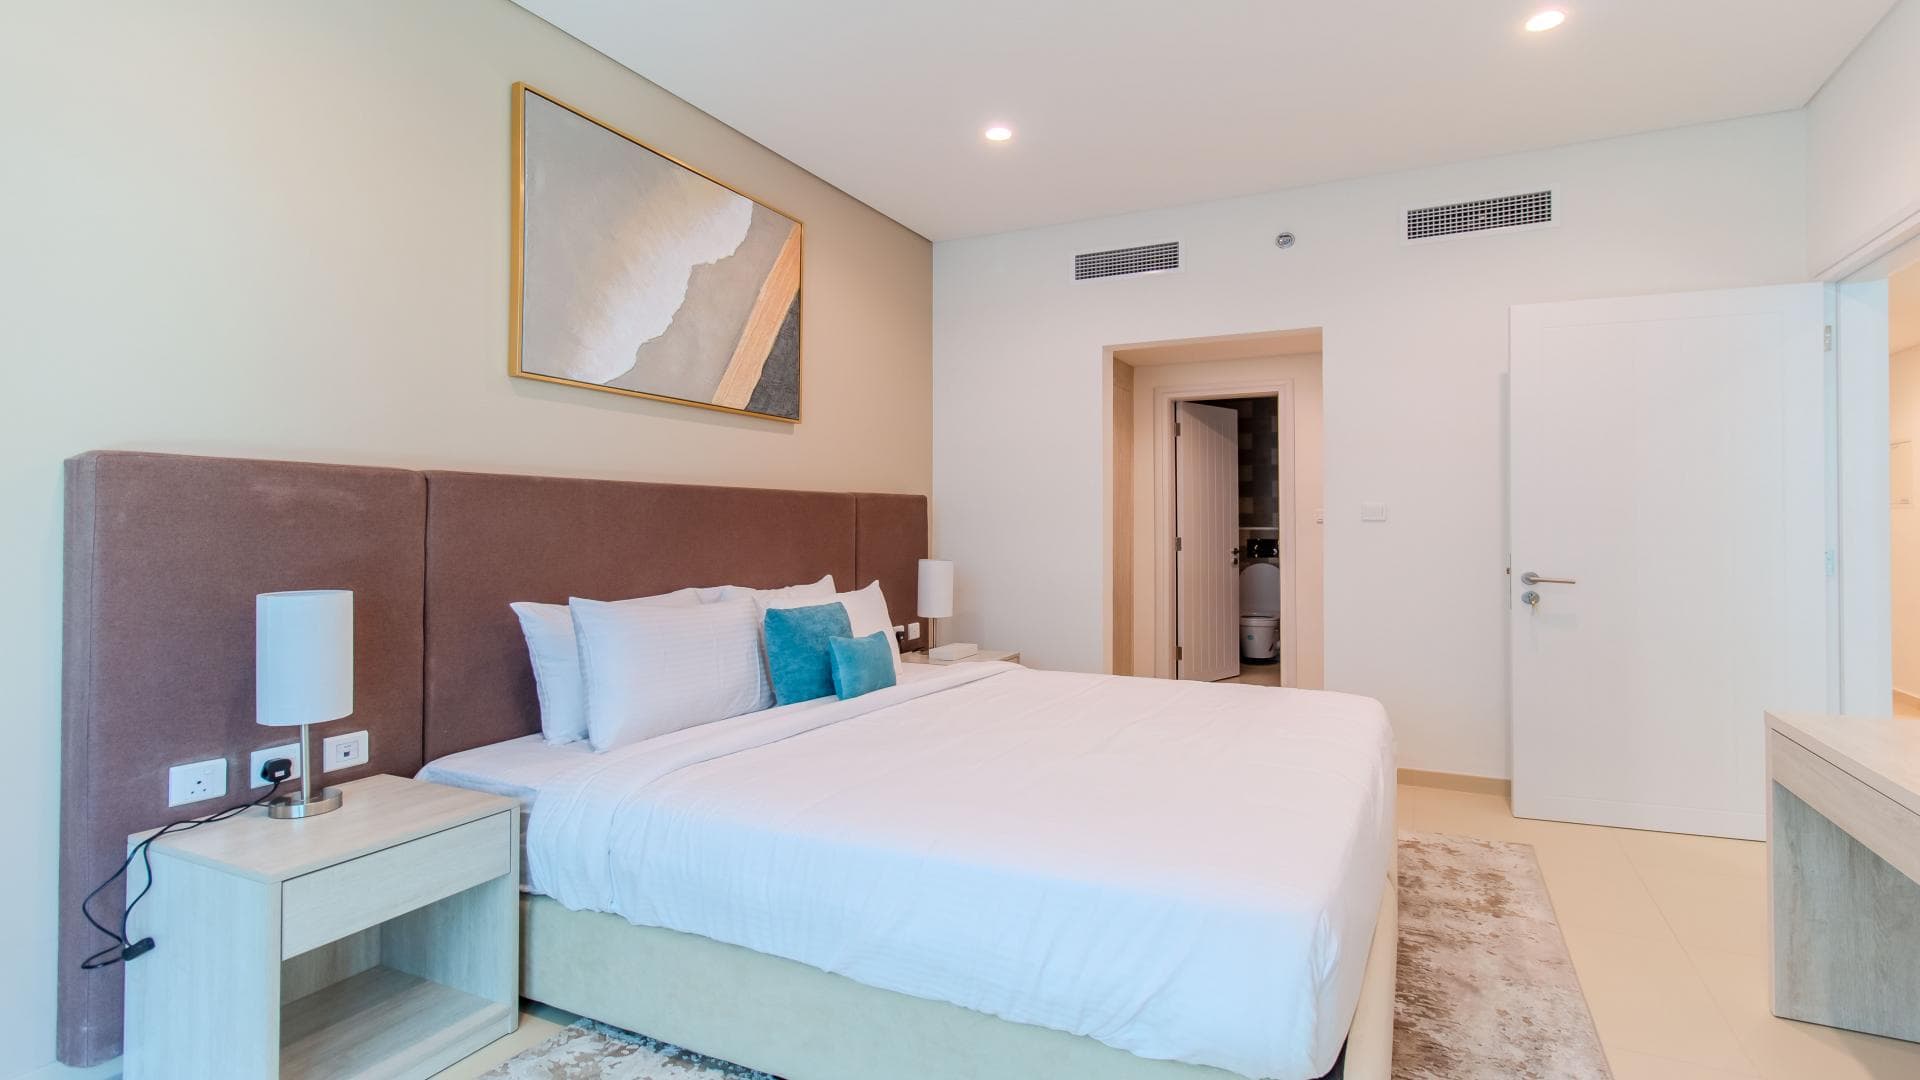 1 Bedroom Apartment For Rent Al Ramth 47 Lp38770 26774d7527606400.jpg